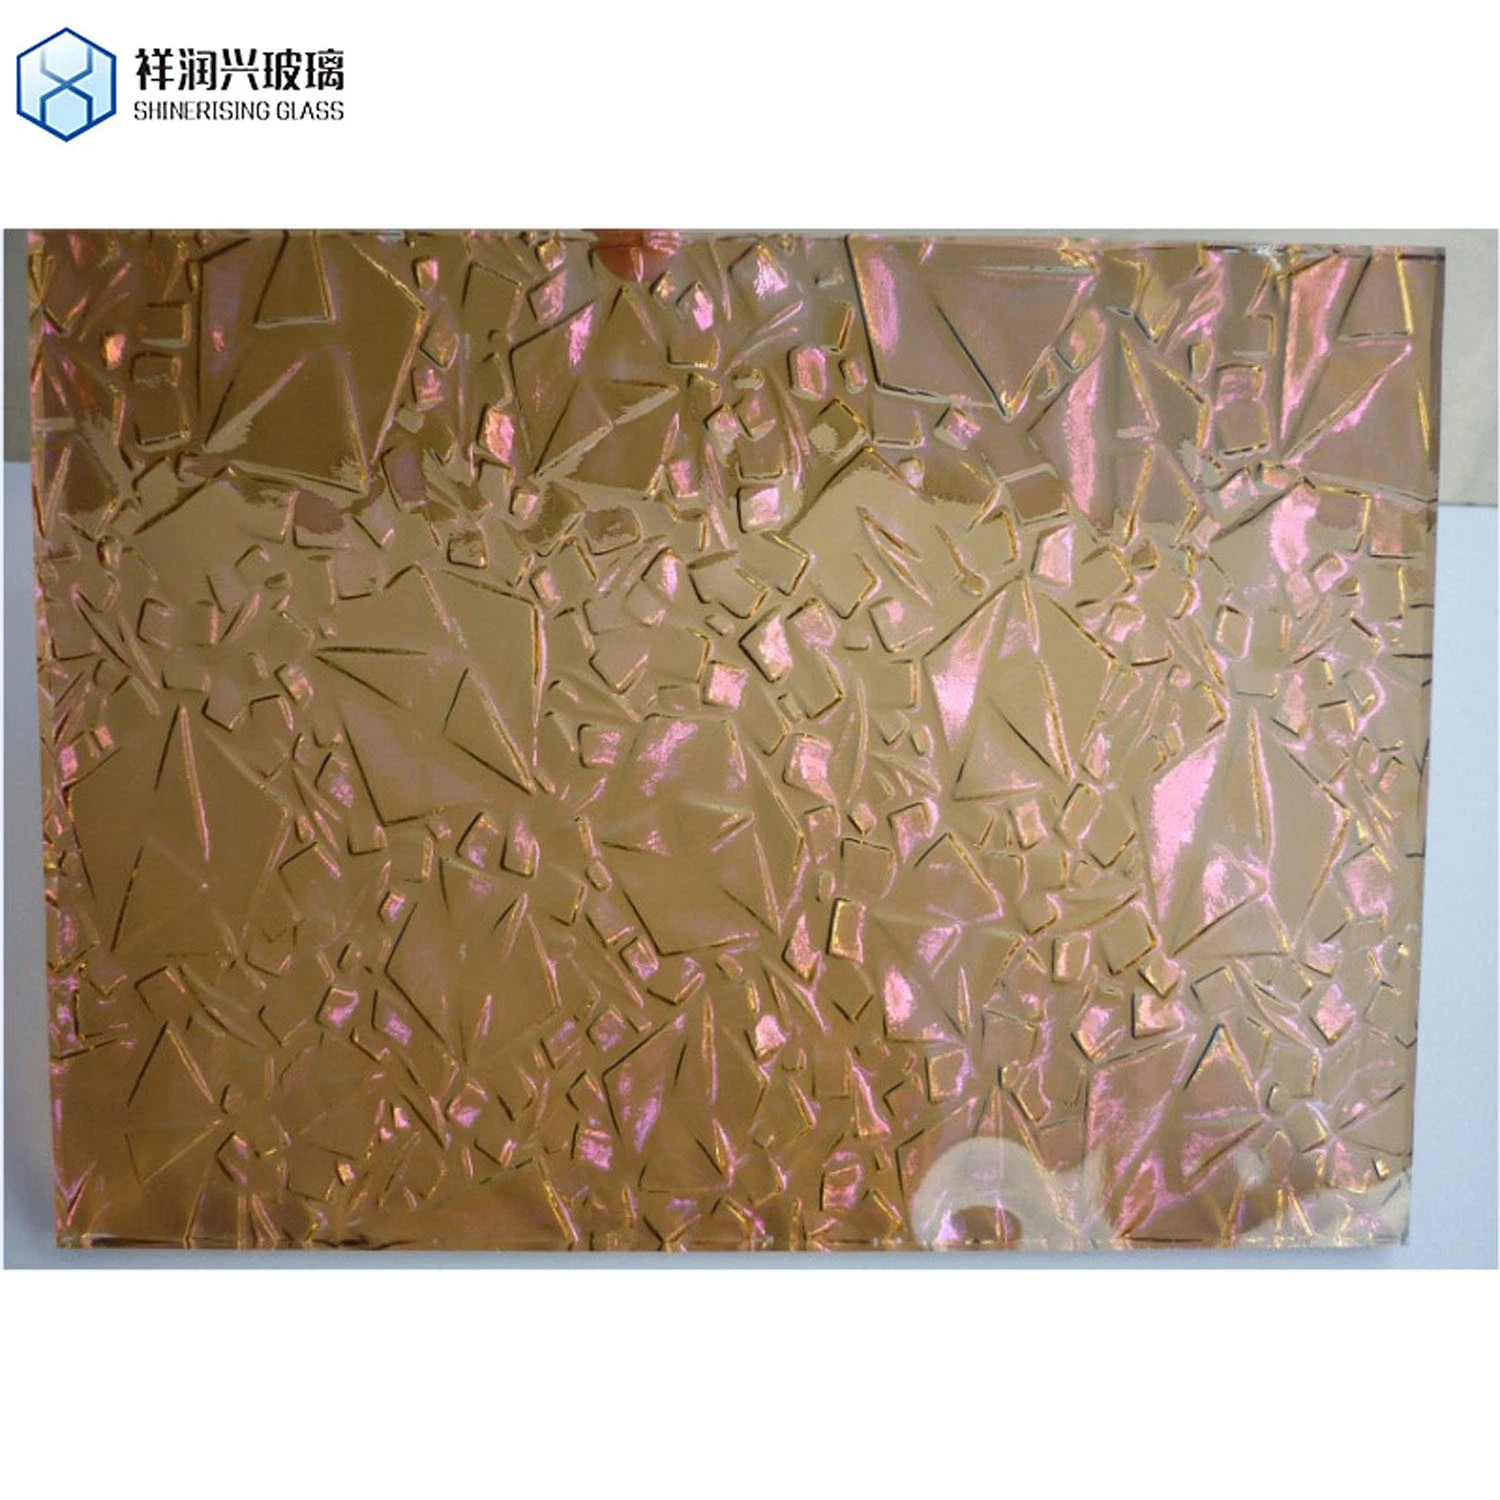 Rectangular & Square Transparent Borosilicate Glass Polished High Temperature Borosilicate 3.3 Glass Sheet